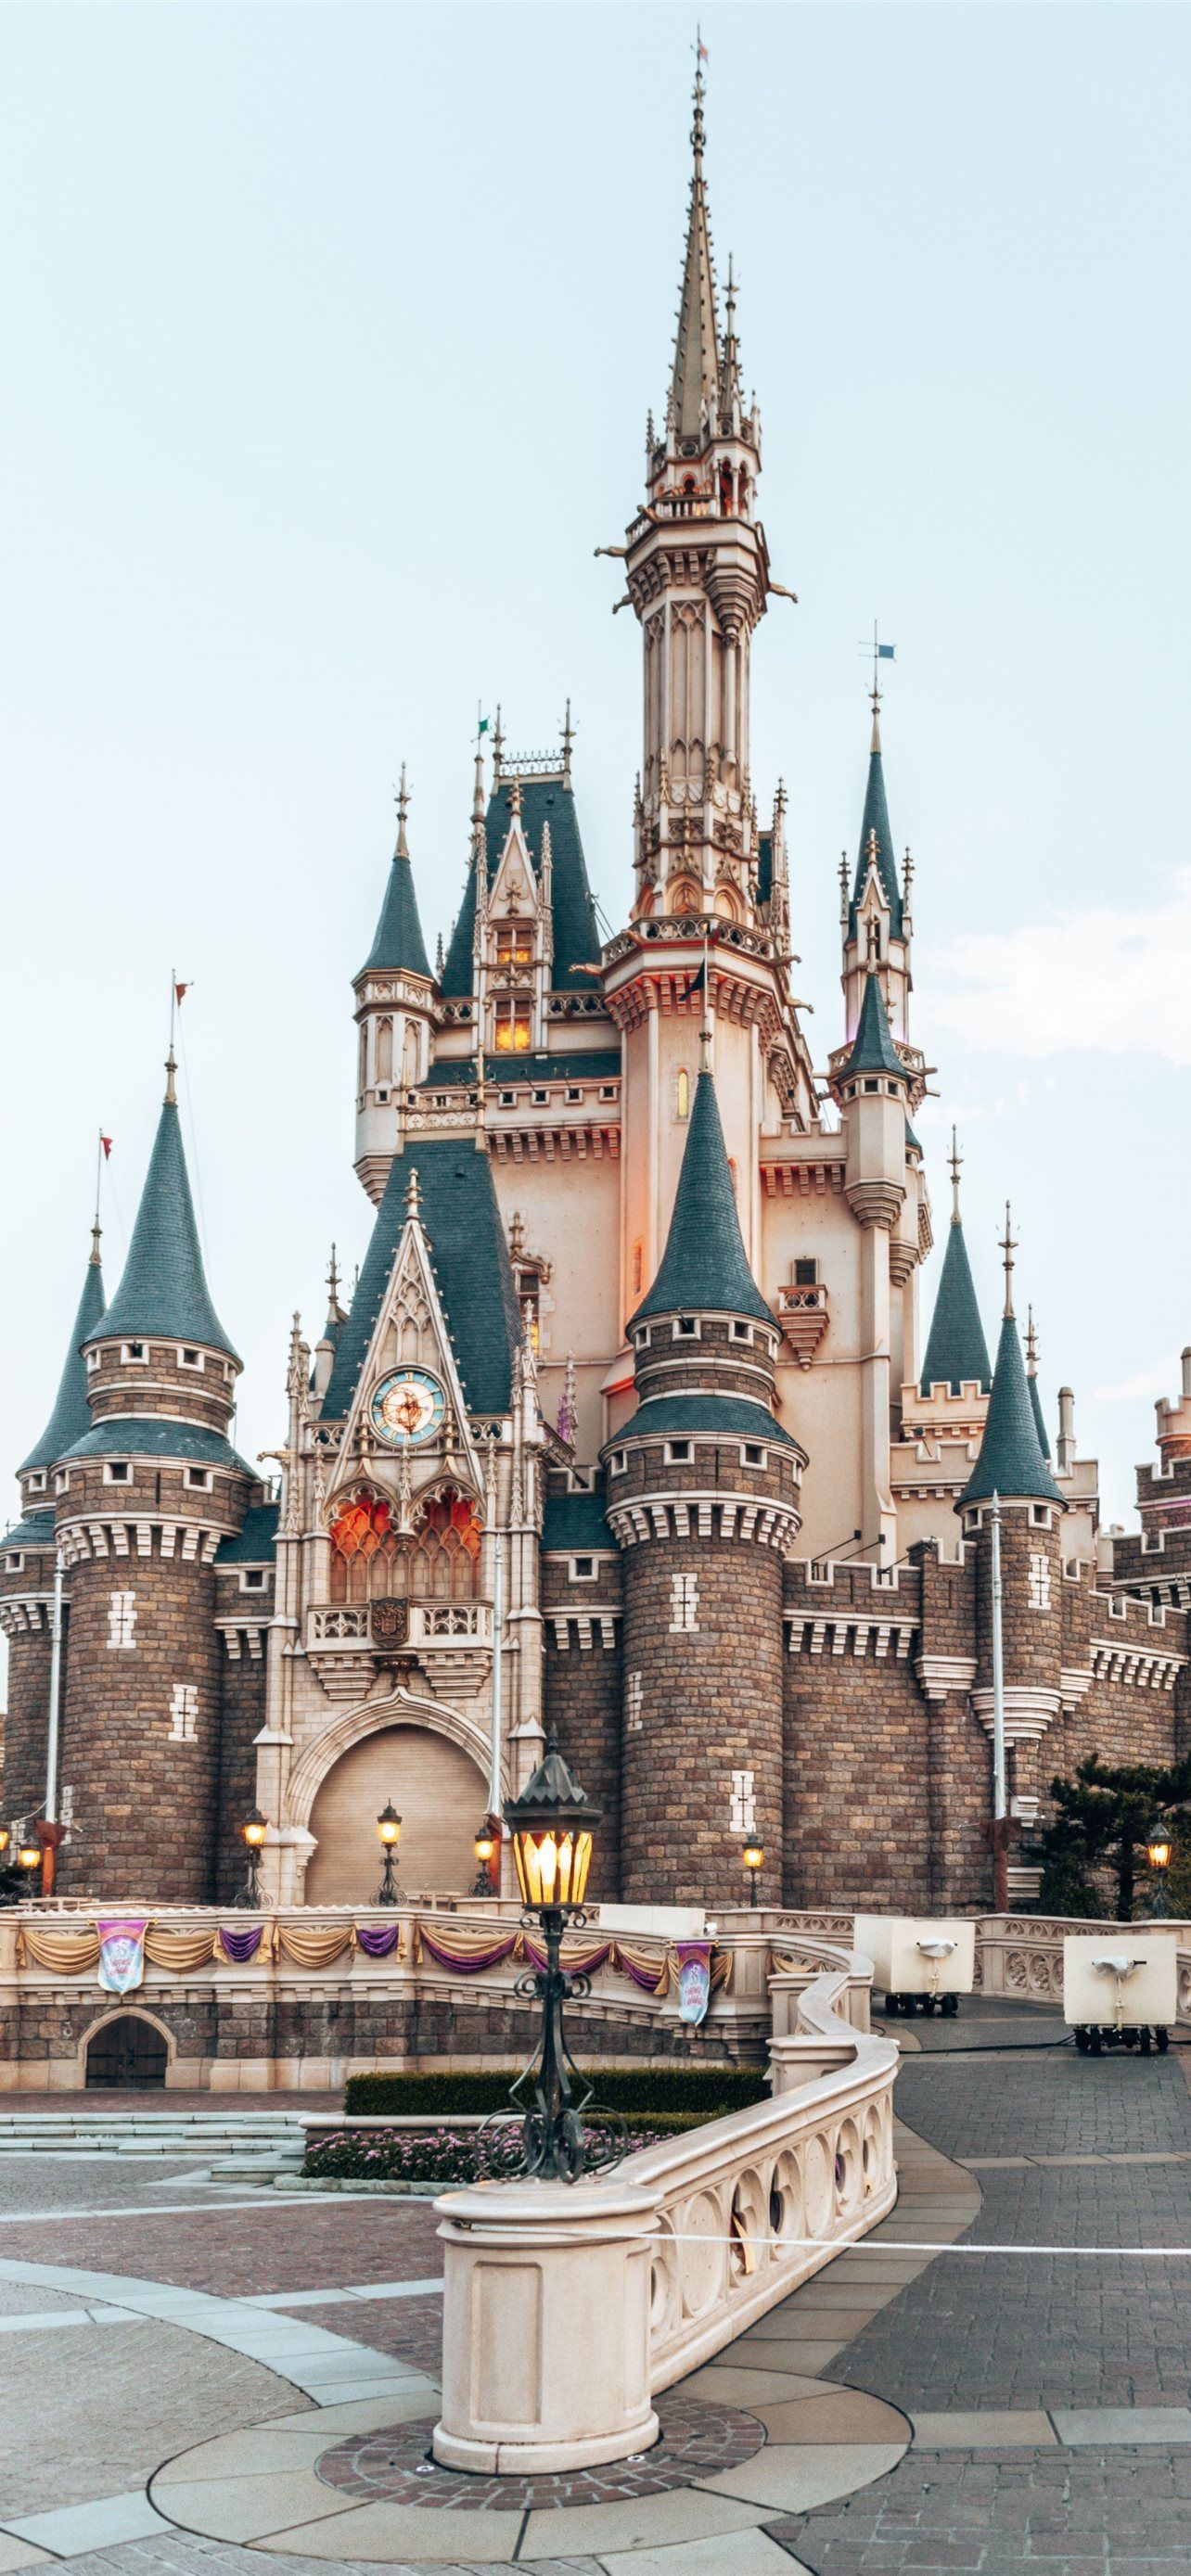 IPhone wallpaper of the beautiful castle at Tokyo Disneyland. - Travel, Disneyland